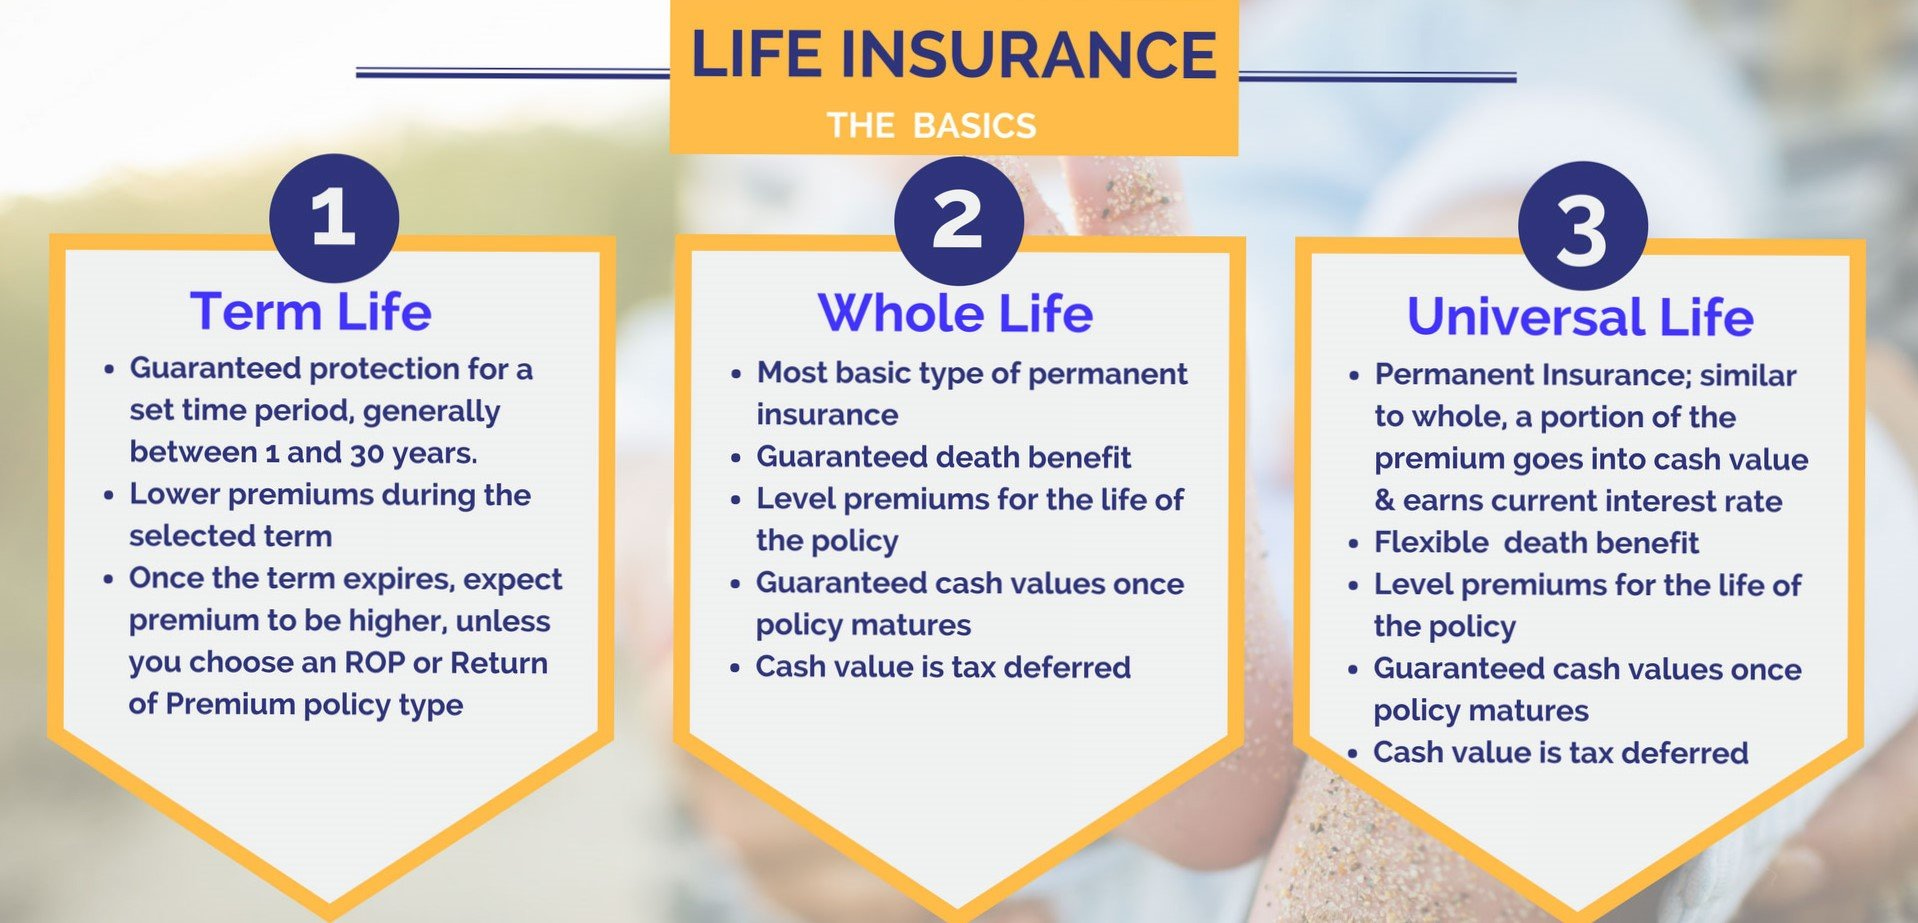 Increasing life insurance